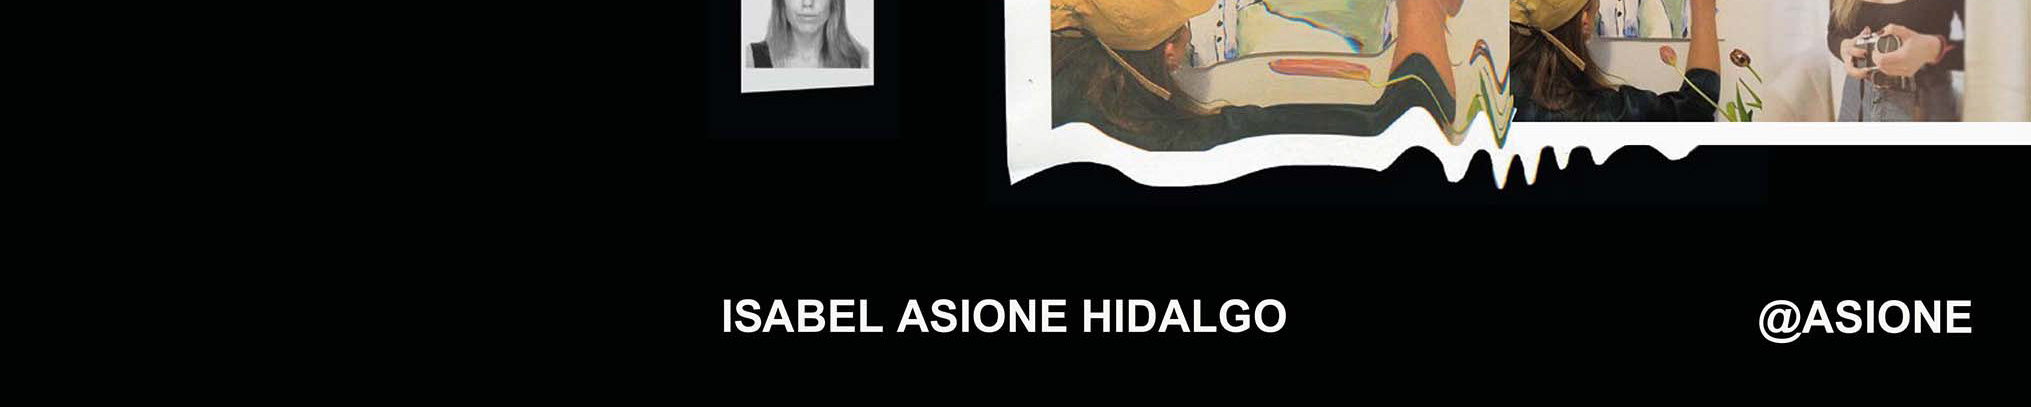 Баннер профиля Isabel asione Hidalgo